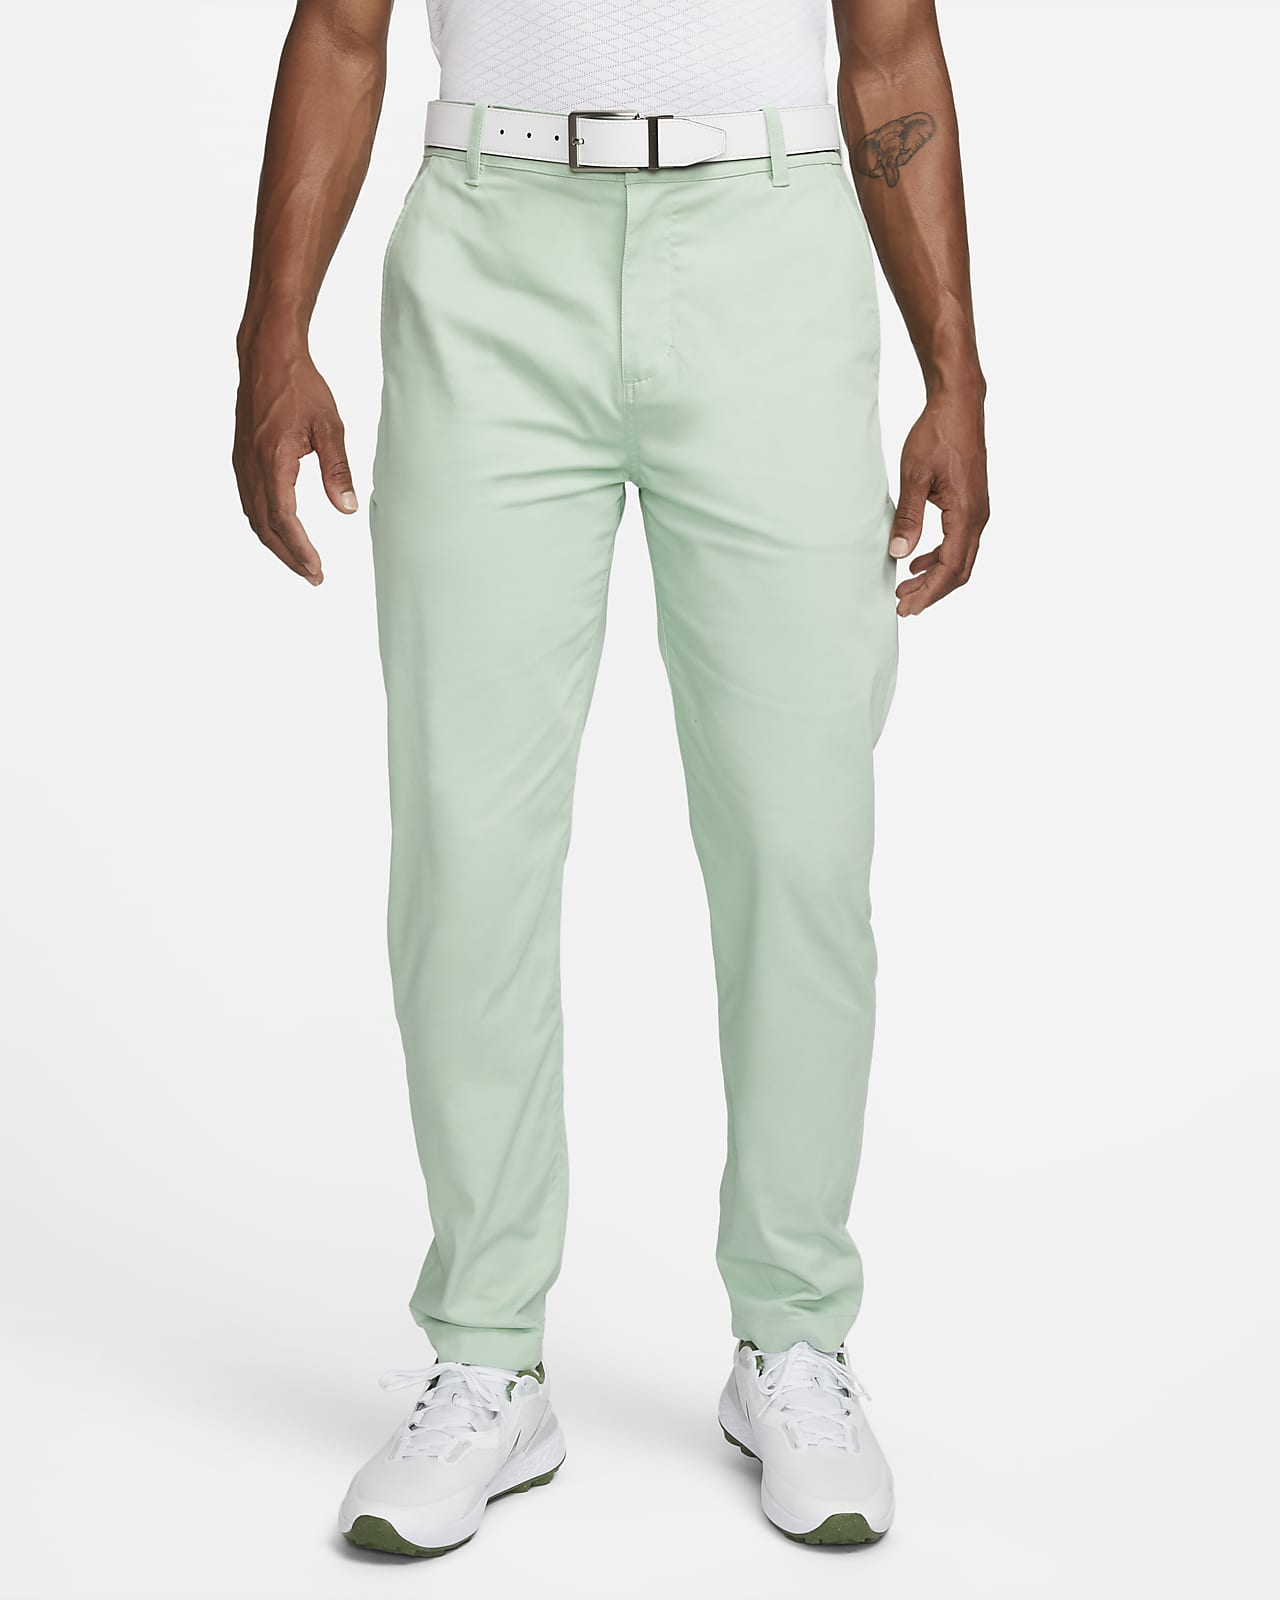 Mens Nike Dri Fit Standard green golf pants size 34 32 National uniform ...